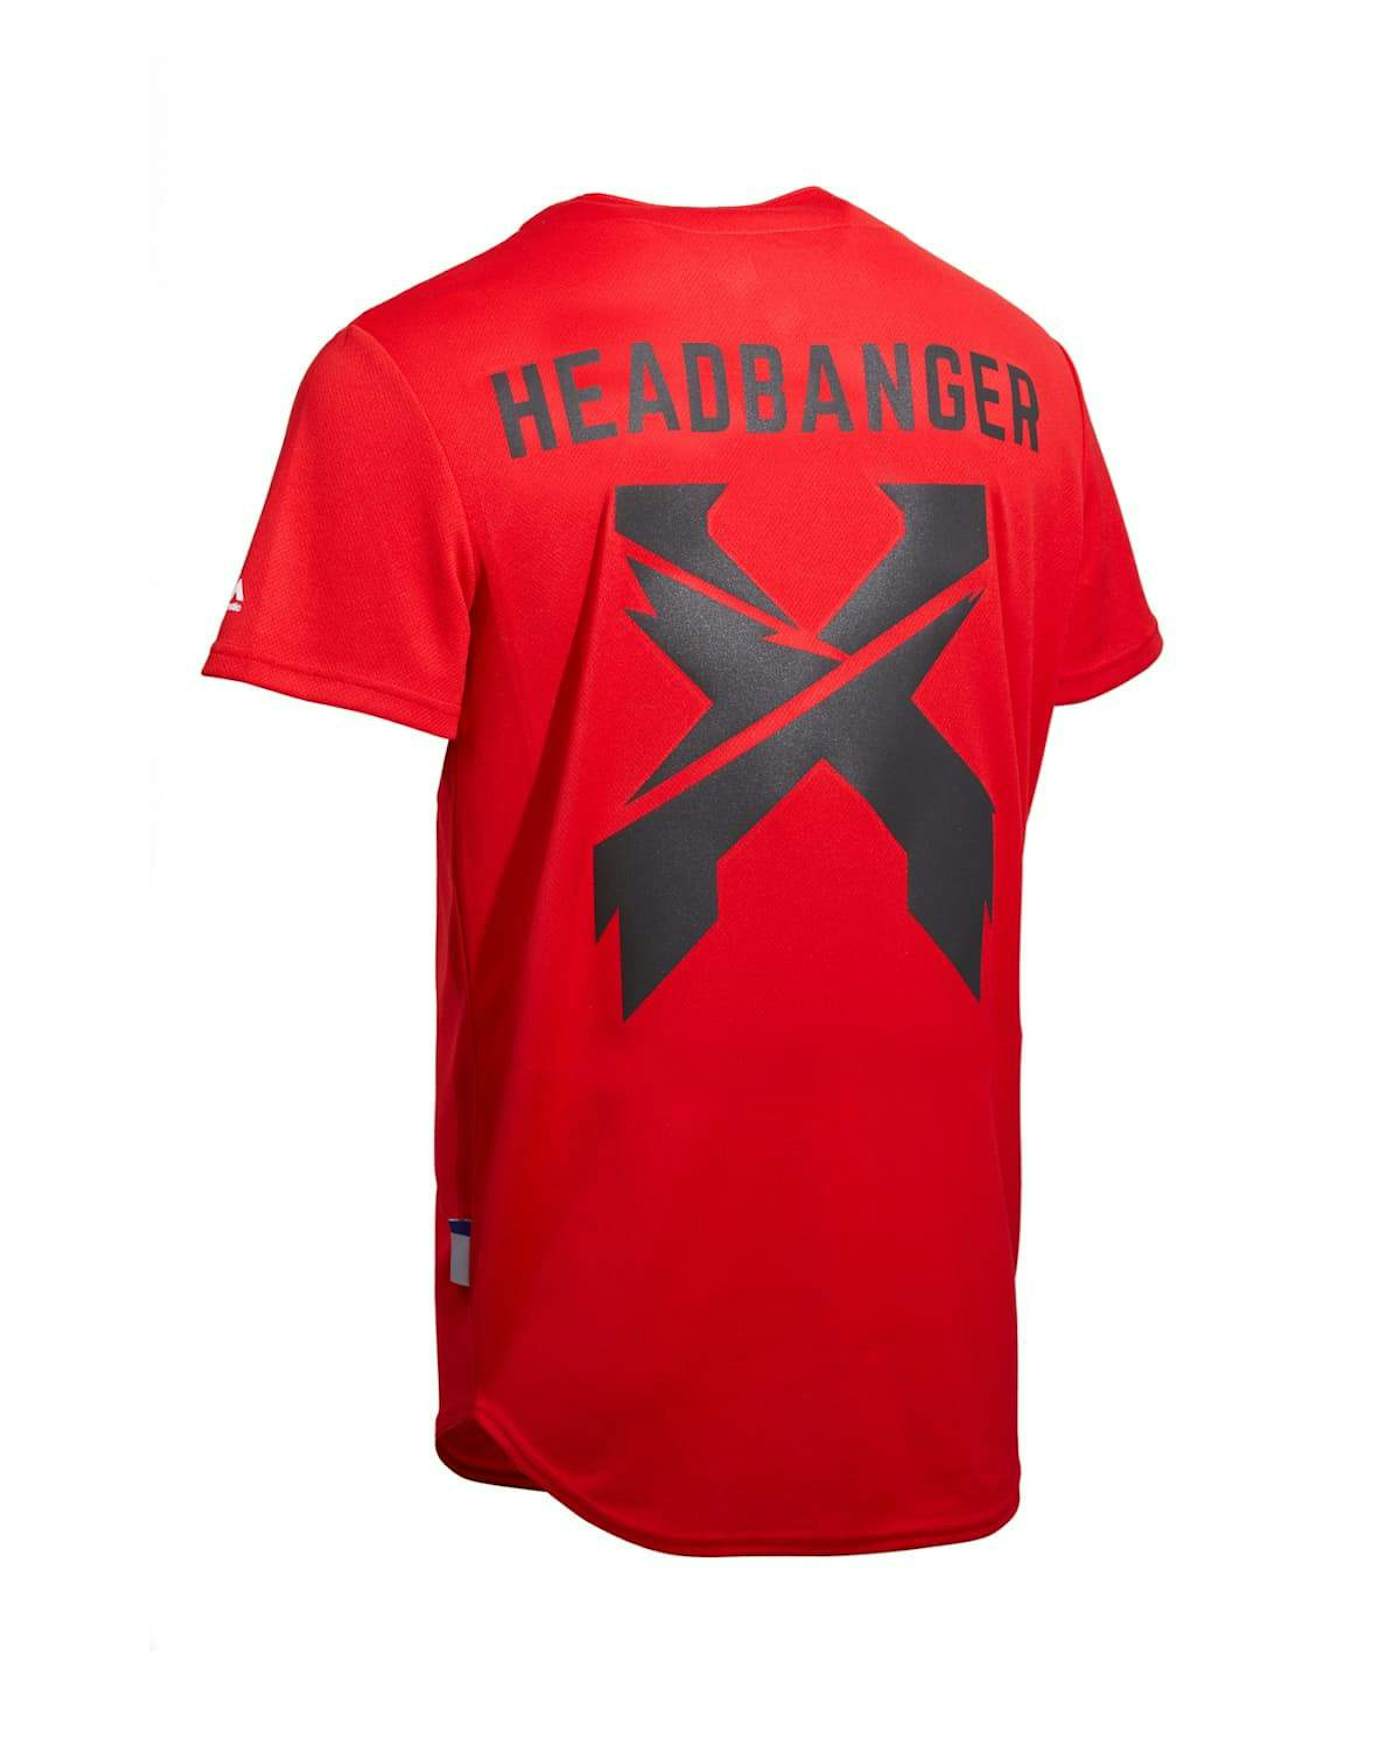 Headbanger' Reflective Baseball Jersey - Excision